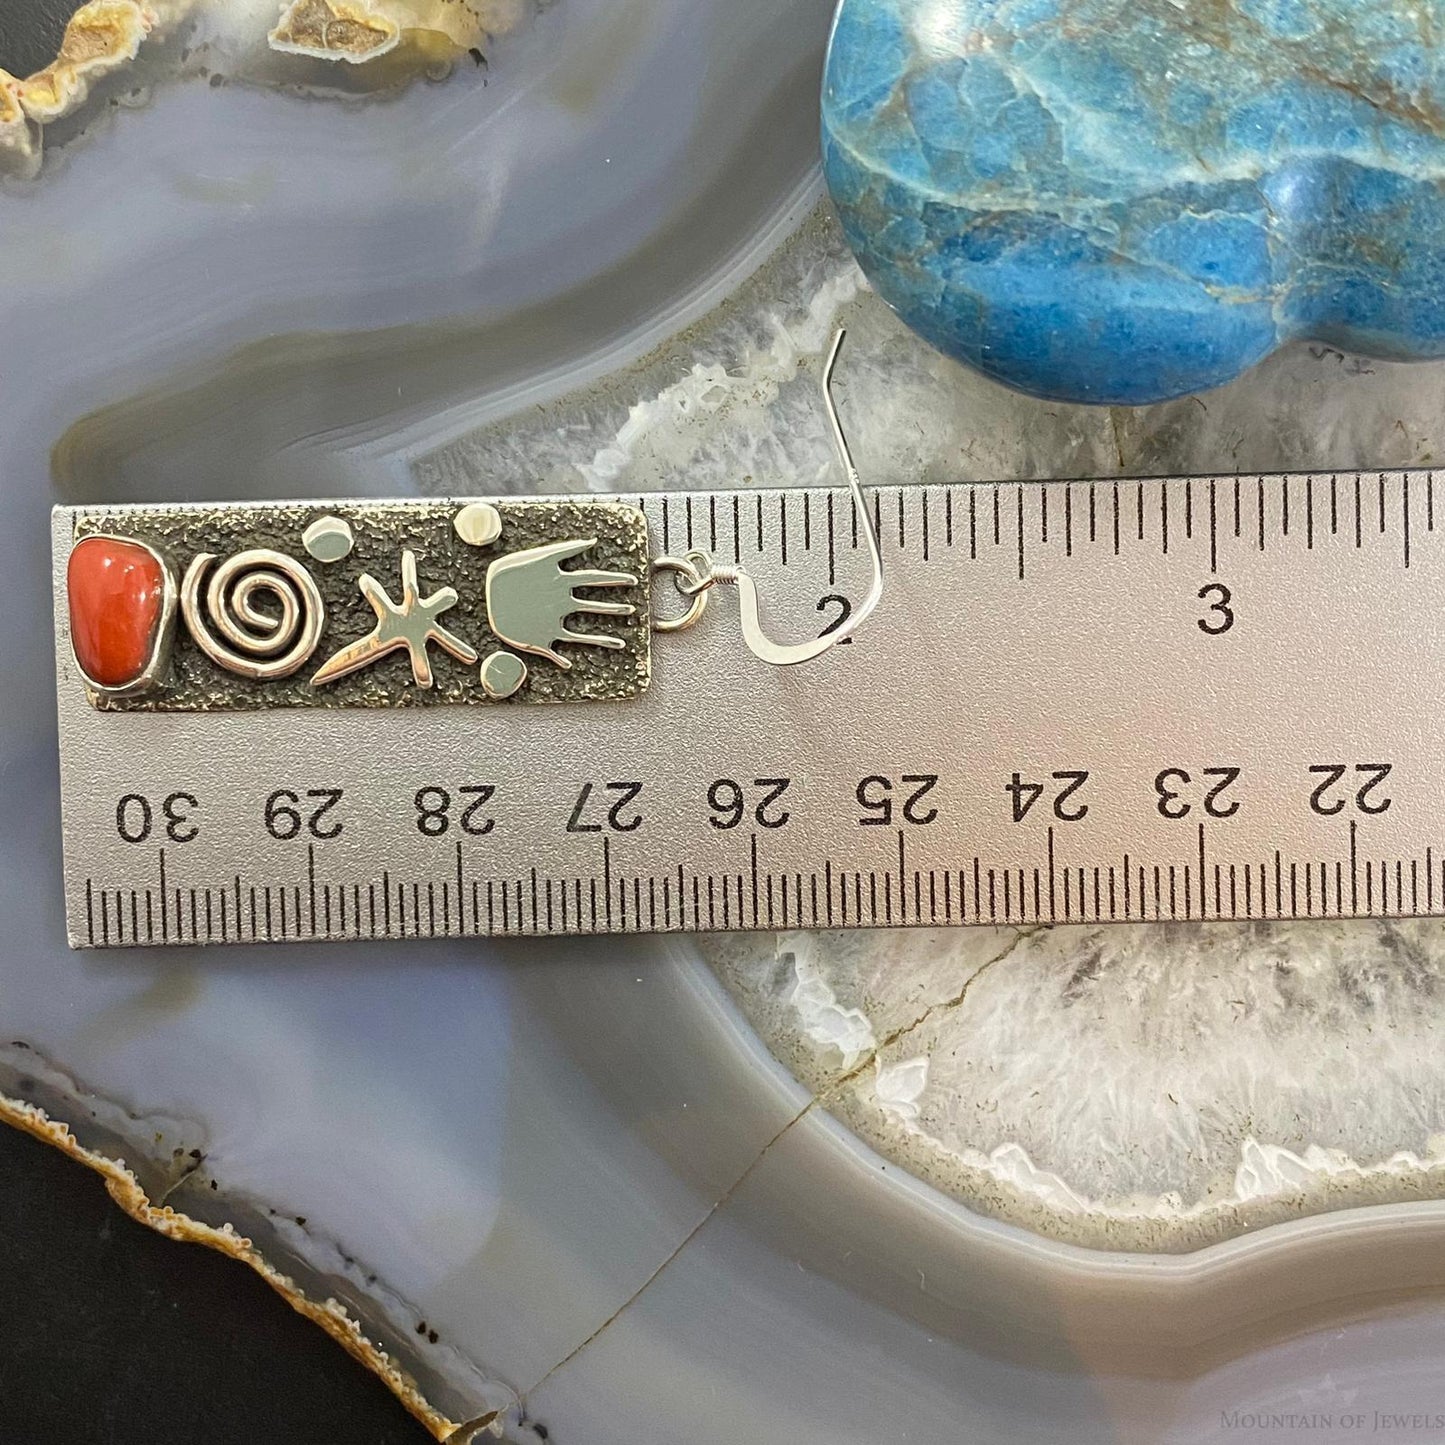 Alex Sanchez Native American Sterling Silver Coral Petroglyph Dangle Earrings For Women #9